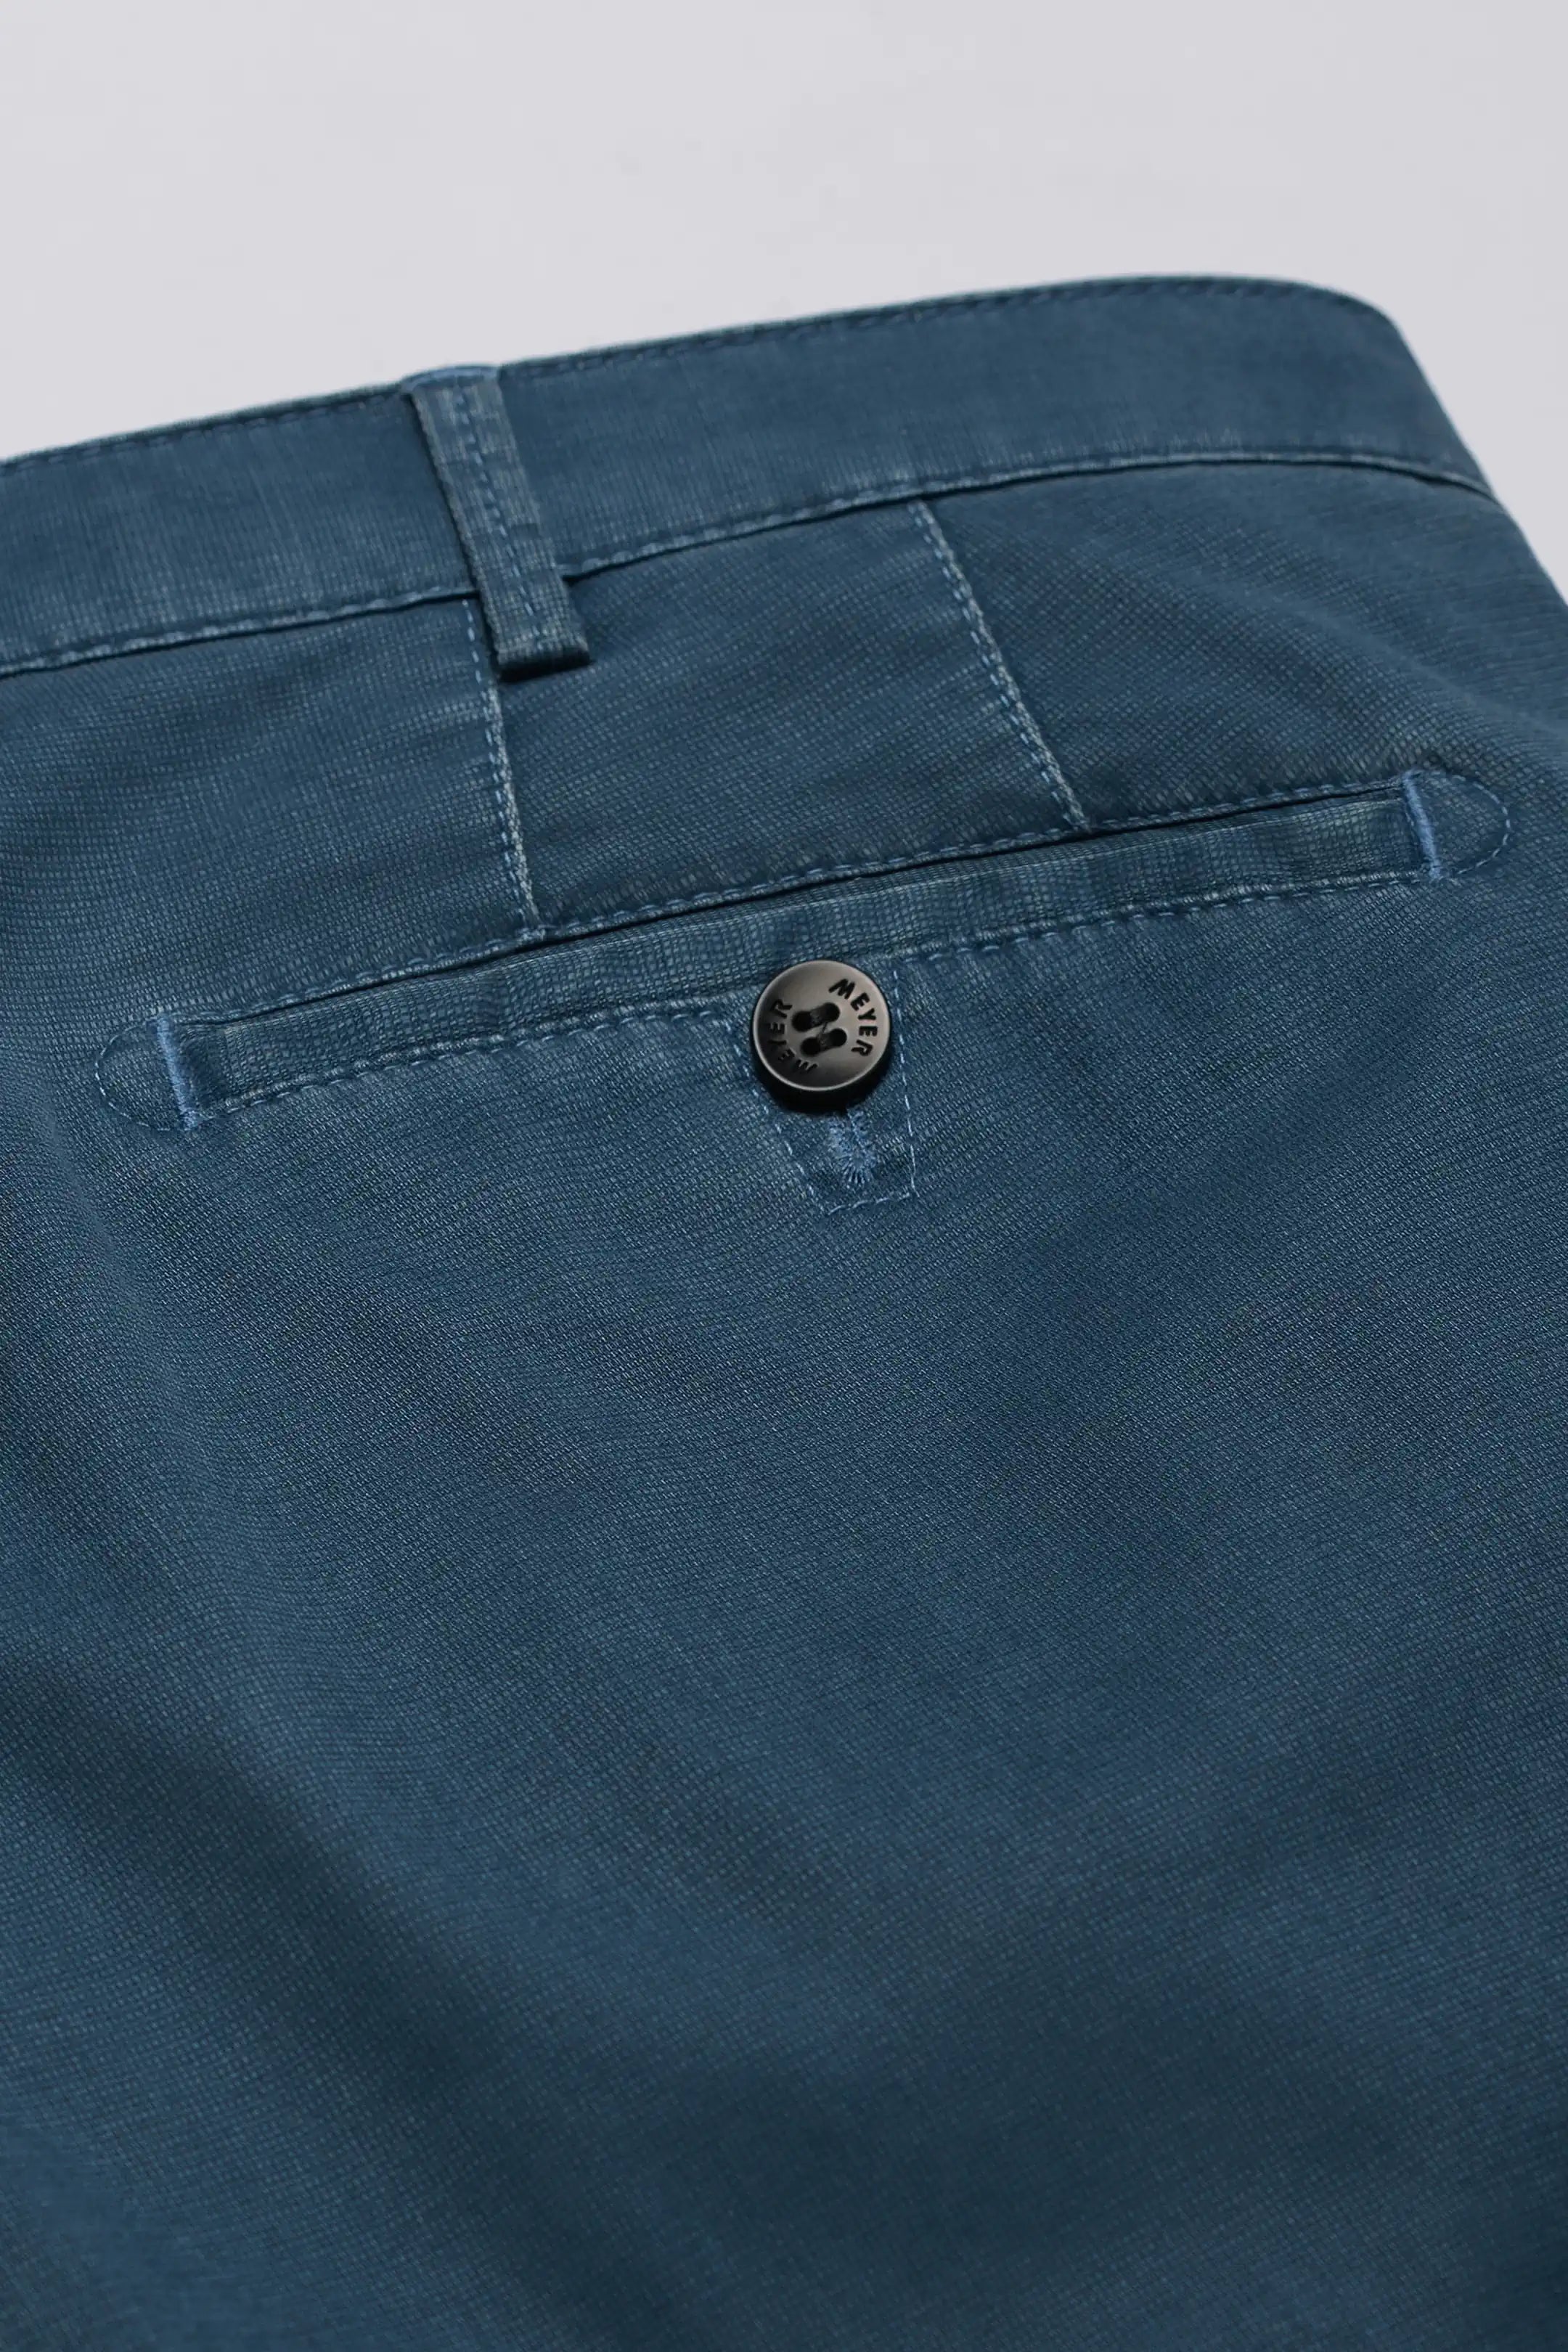 MEYER Roma Trousers - 5058 Liberty Fabric Cotton Chinos - Blue